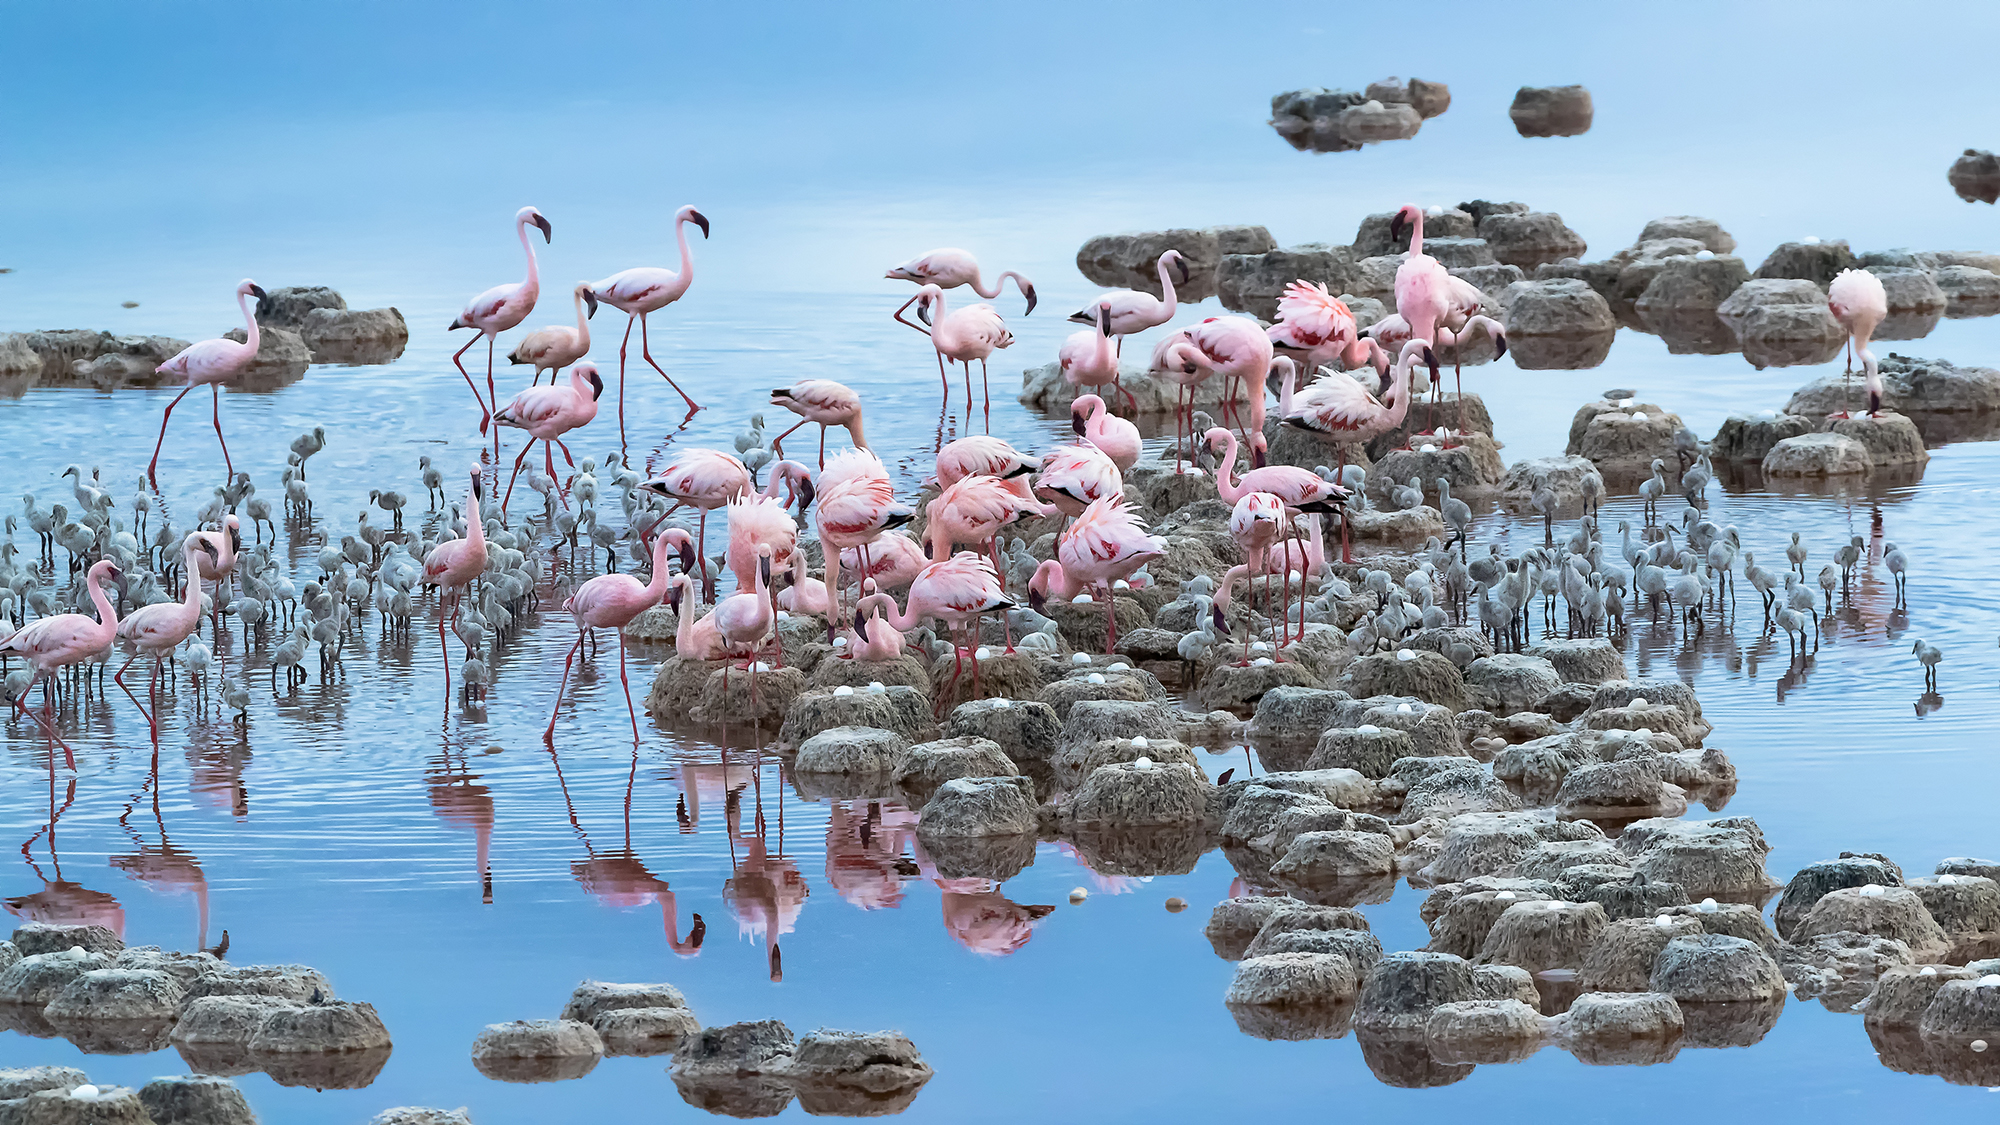 Flamingos in Tanzania's Lake Natron